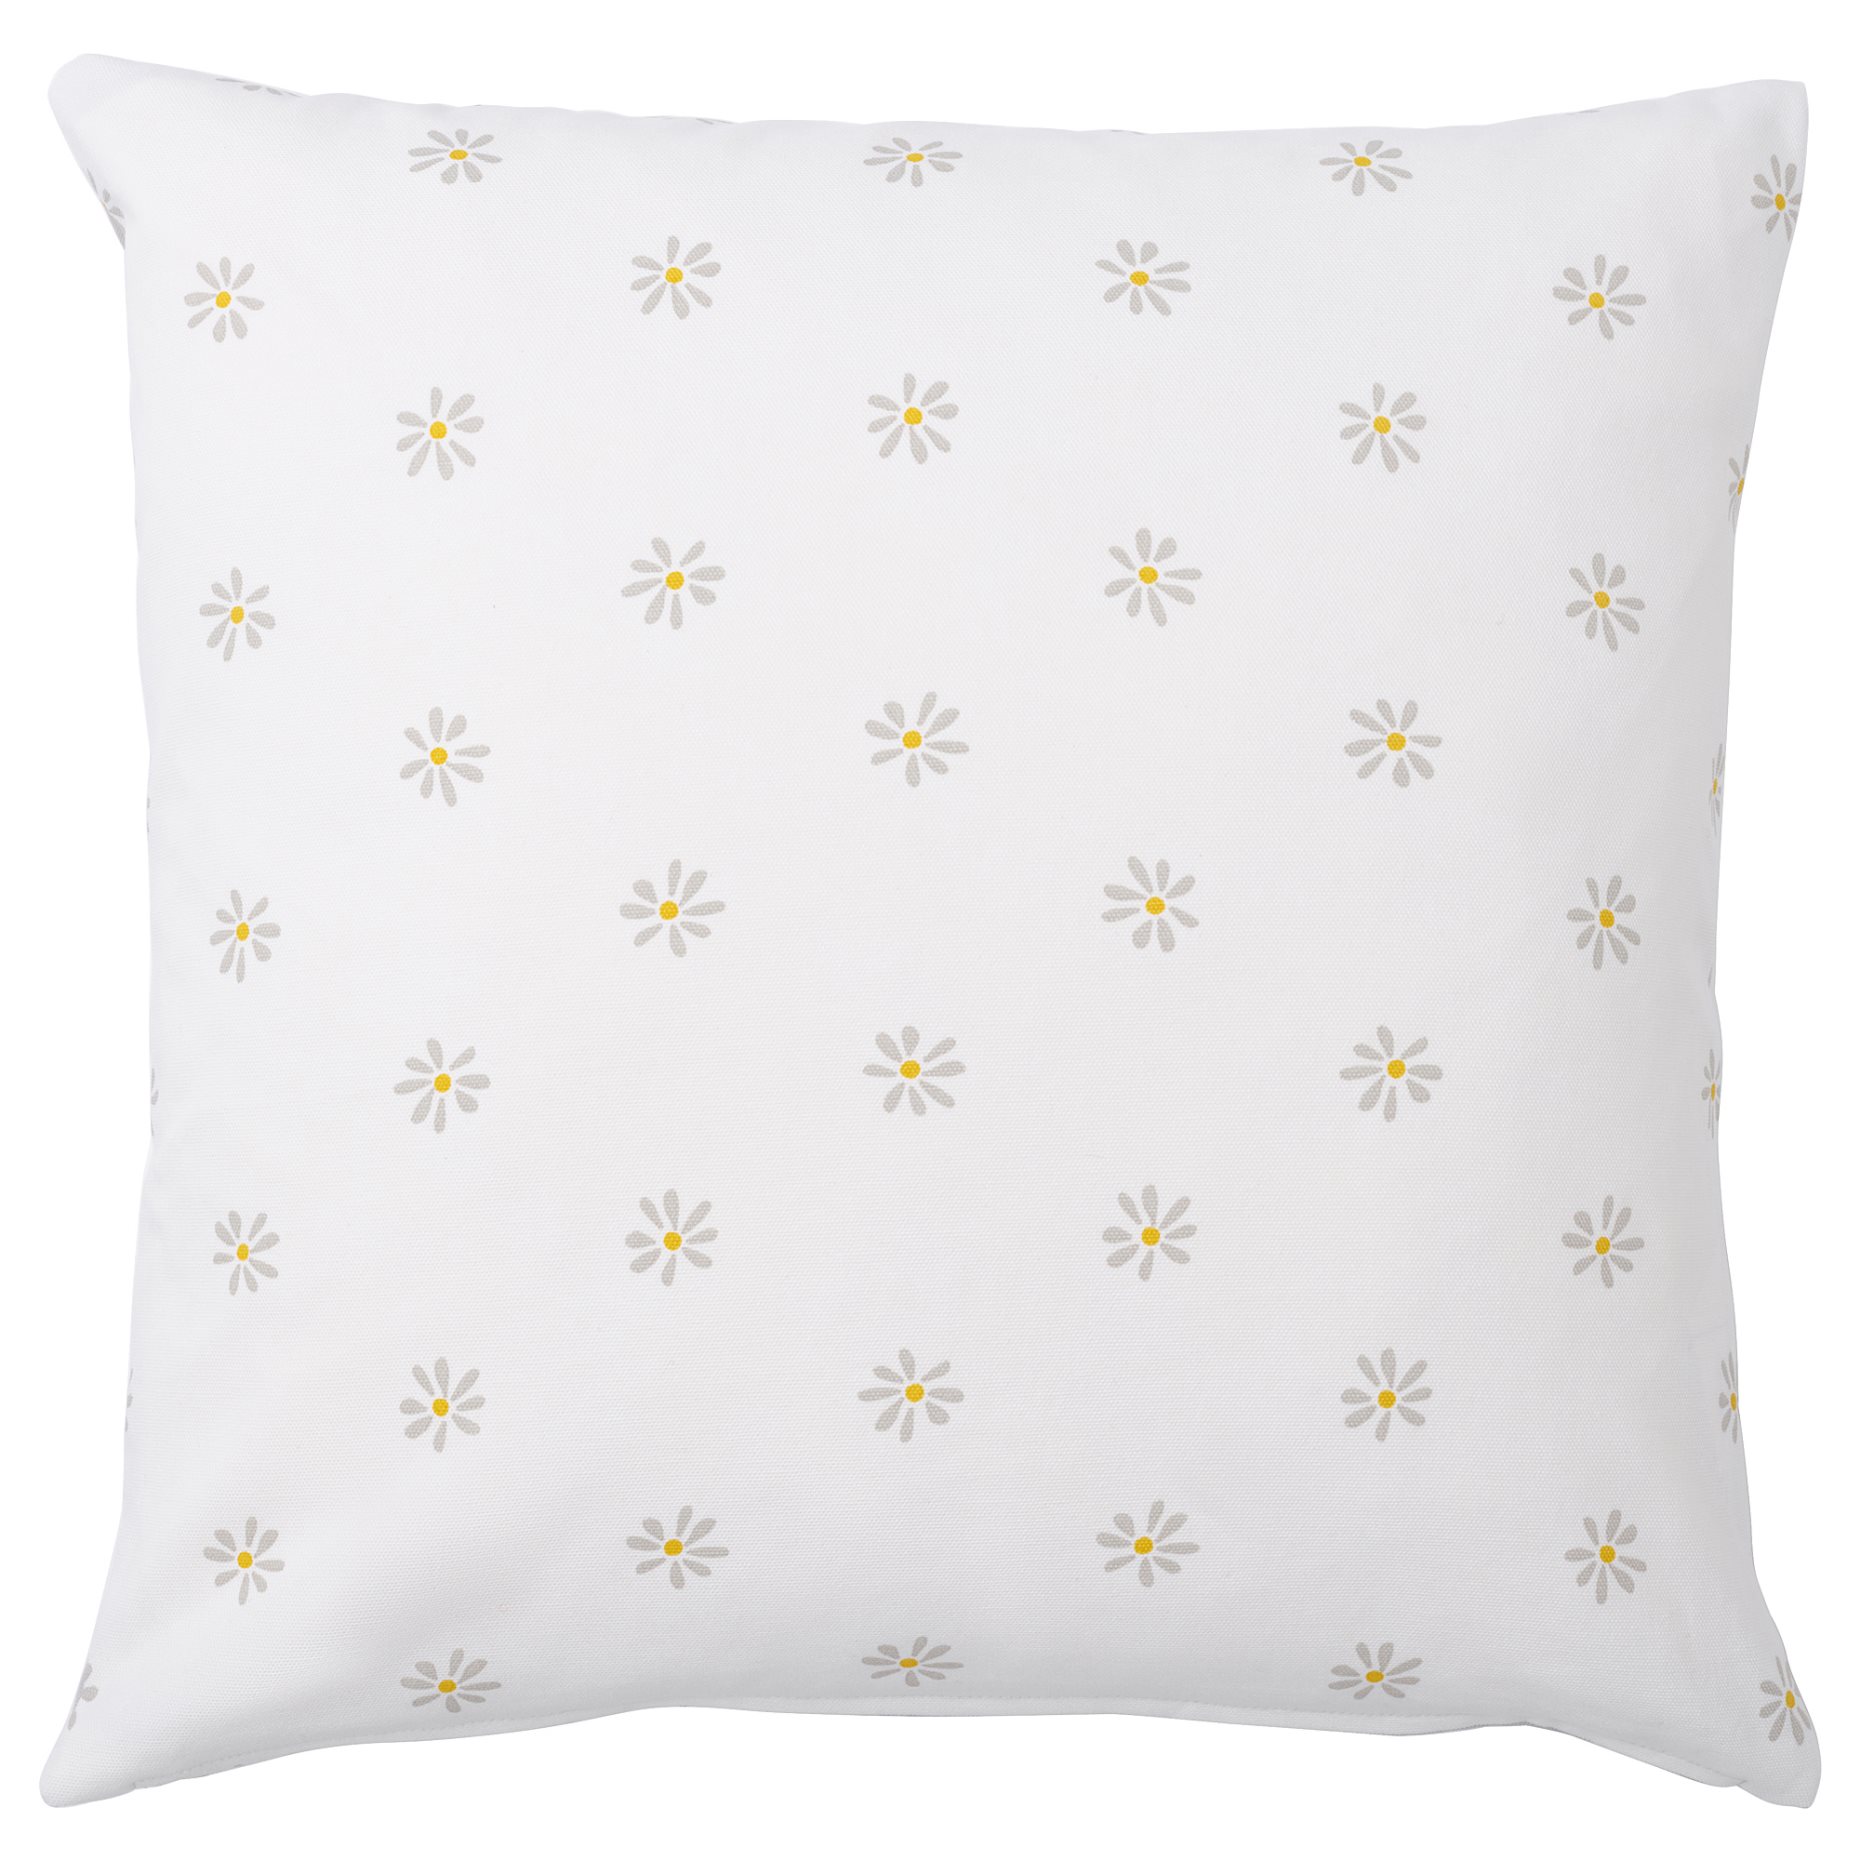 NATTSLÄNDA, cushion cover/floral pattern, 50x50 cm, 305.080.40